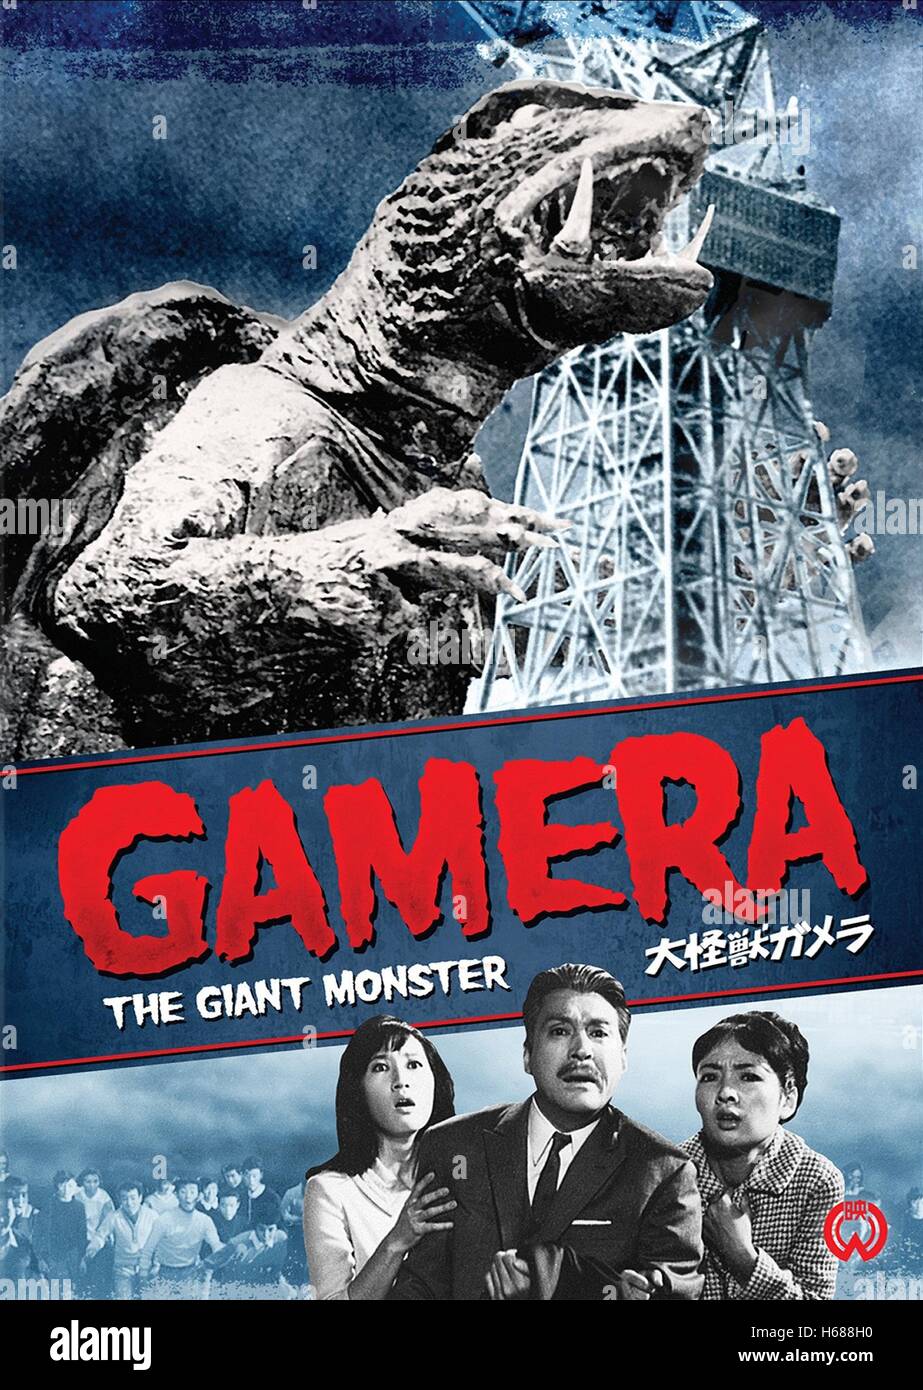 laffiche-de-film-de-monstre-geant-gamera-daikaiju-gamera-1965-h688h0.jpg